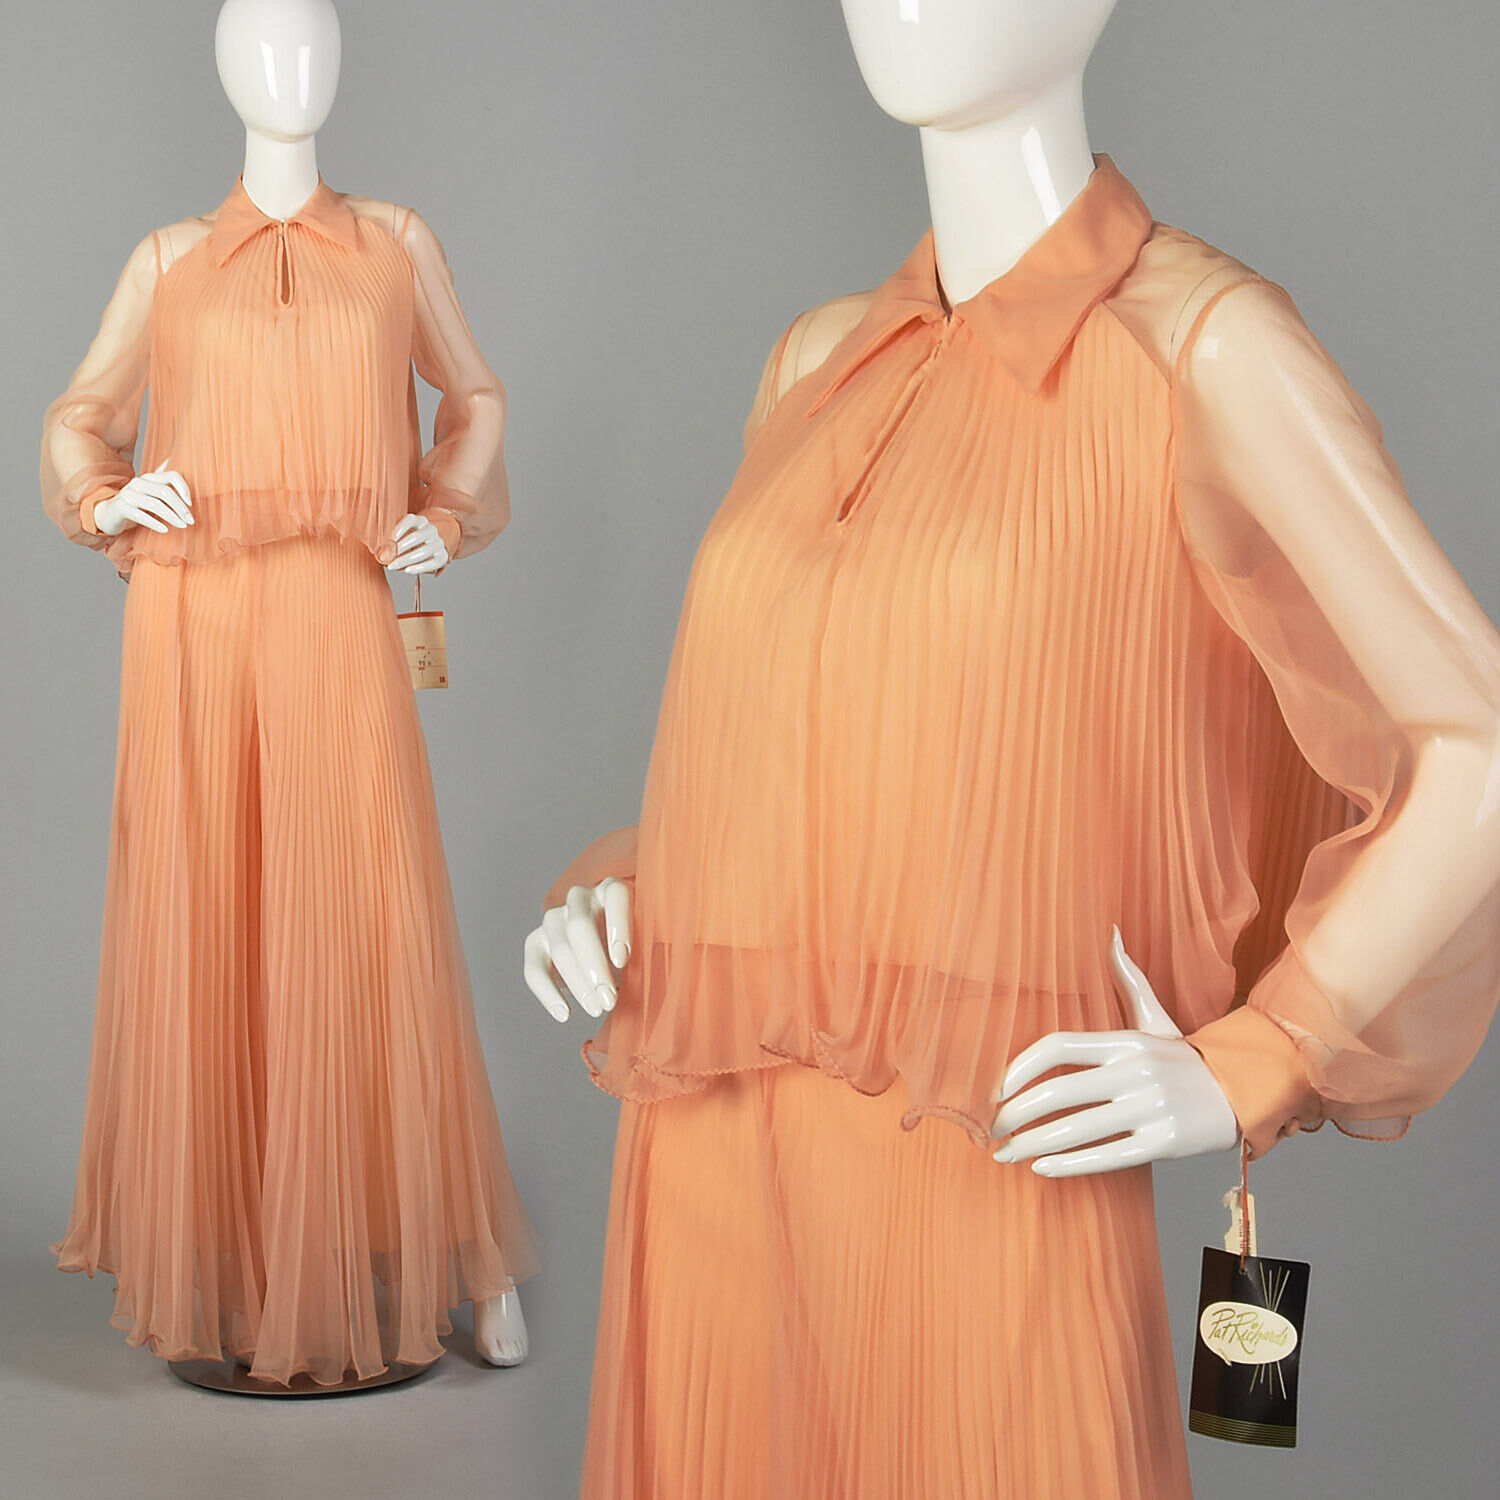 S 1970s Palazzo Pants Outfit Orange Chiffon Long Sleeve Top High